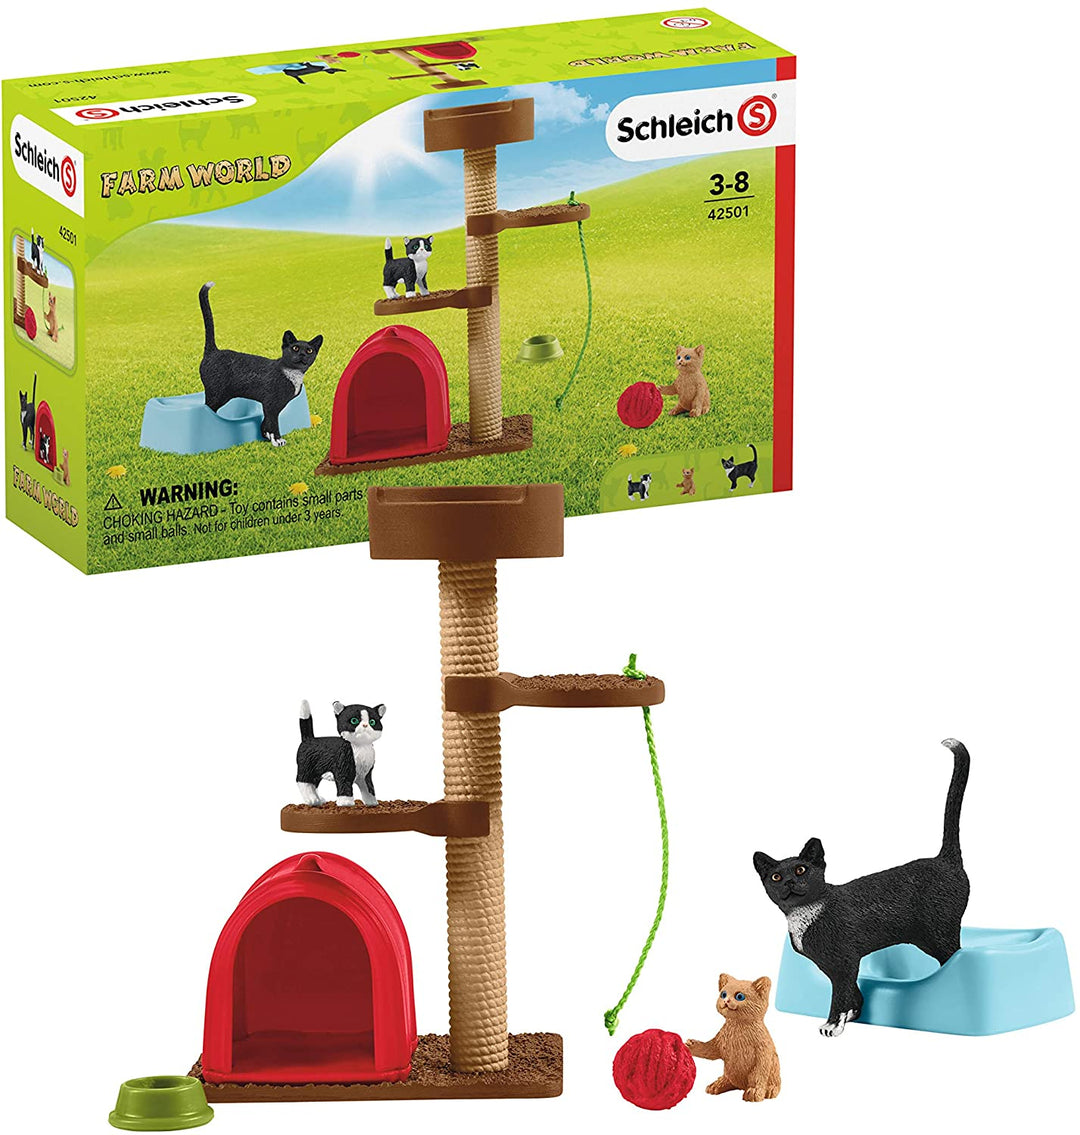 Schleich 42501 Speeltijd voor Cute Cats Farm World